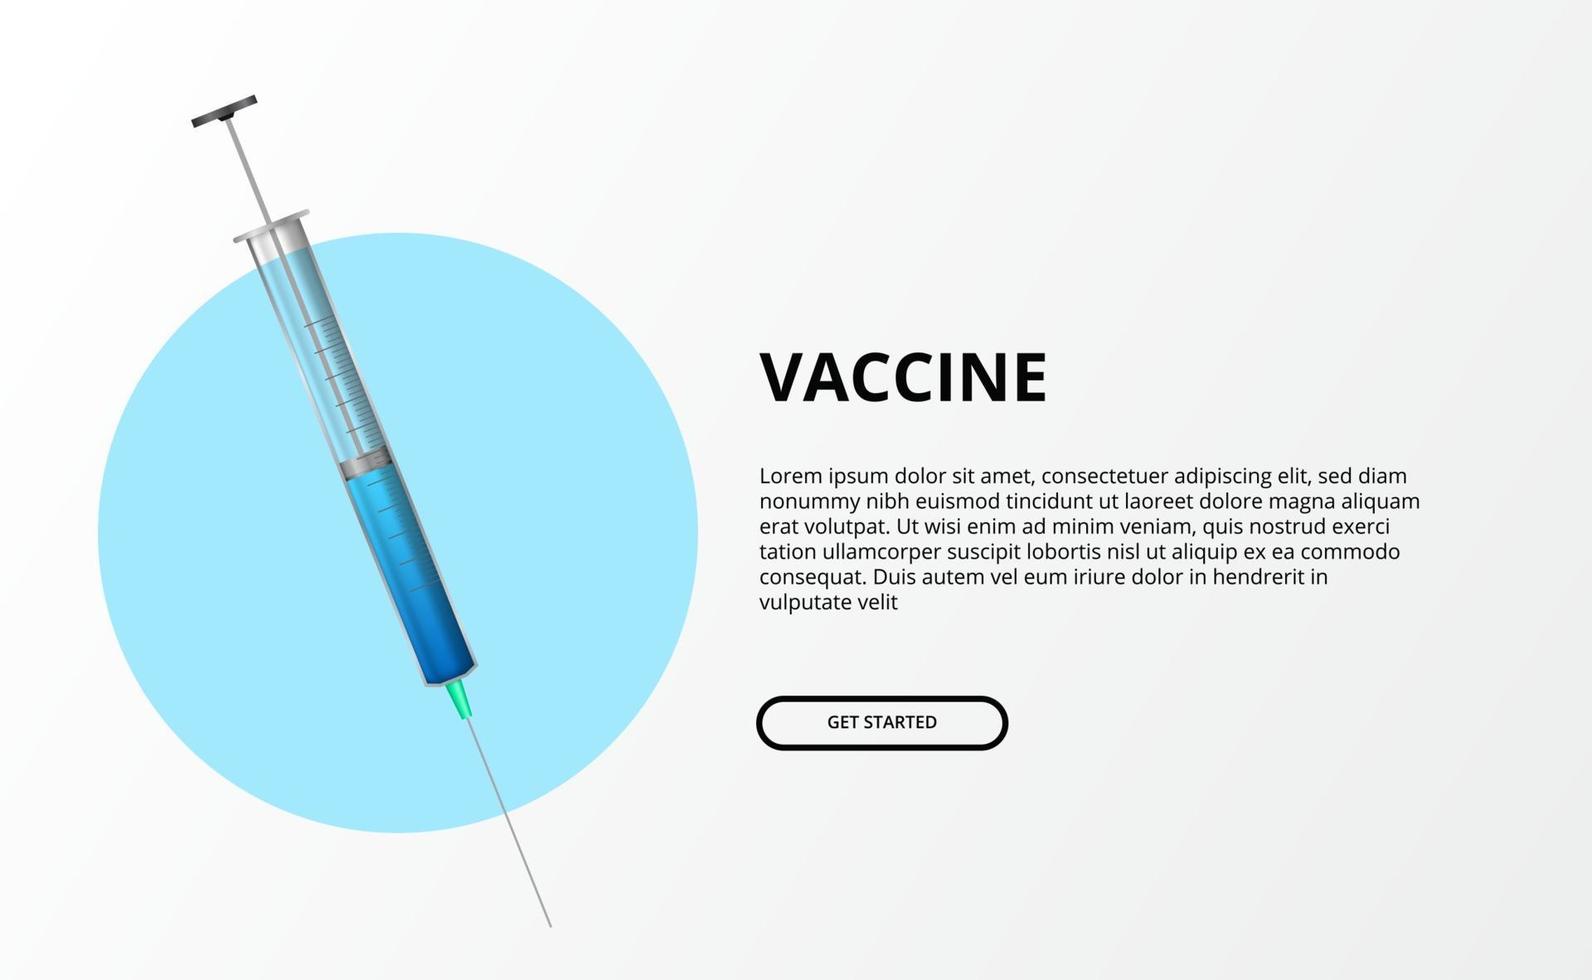 Vaccine illustration concept. 3D Syringe with blue liquid drug cure vector